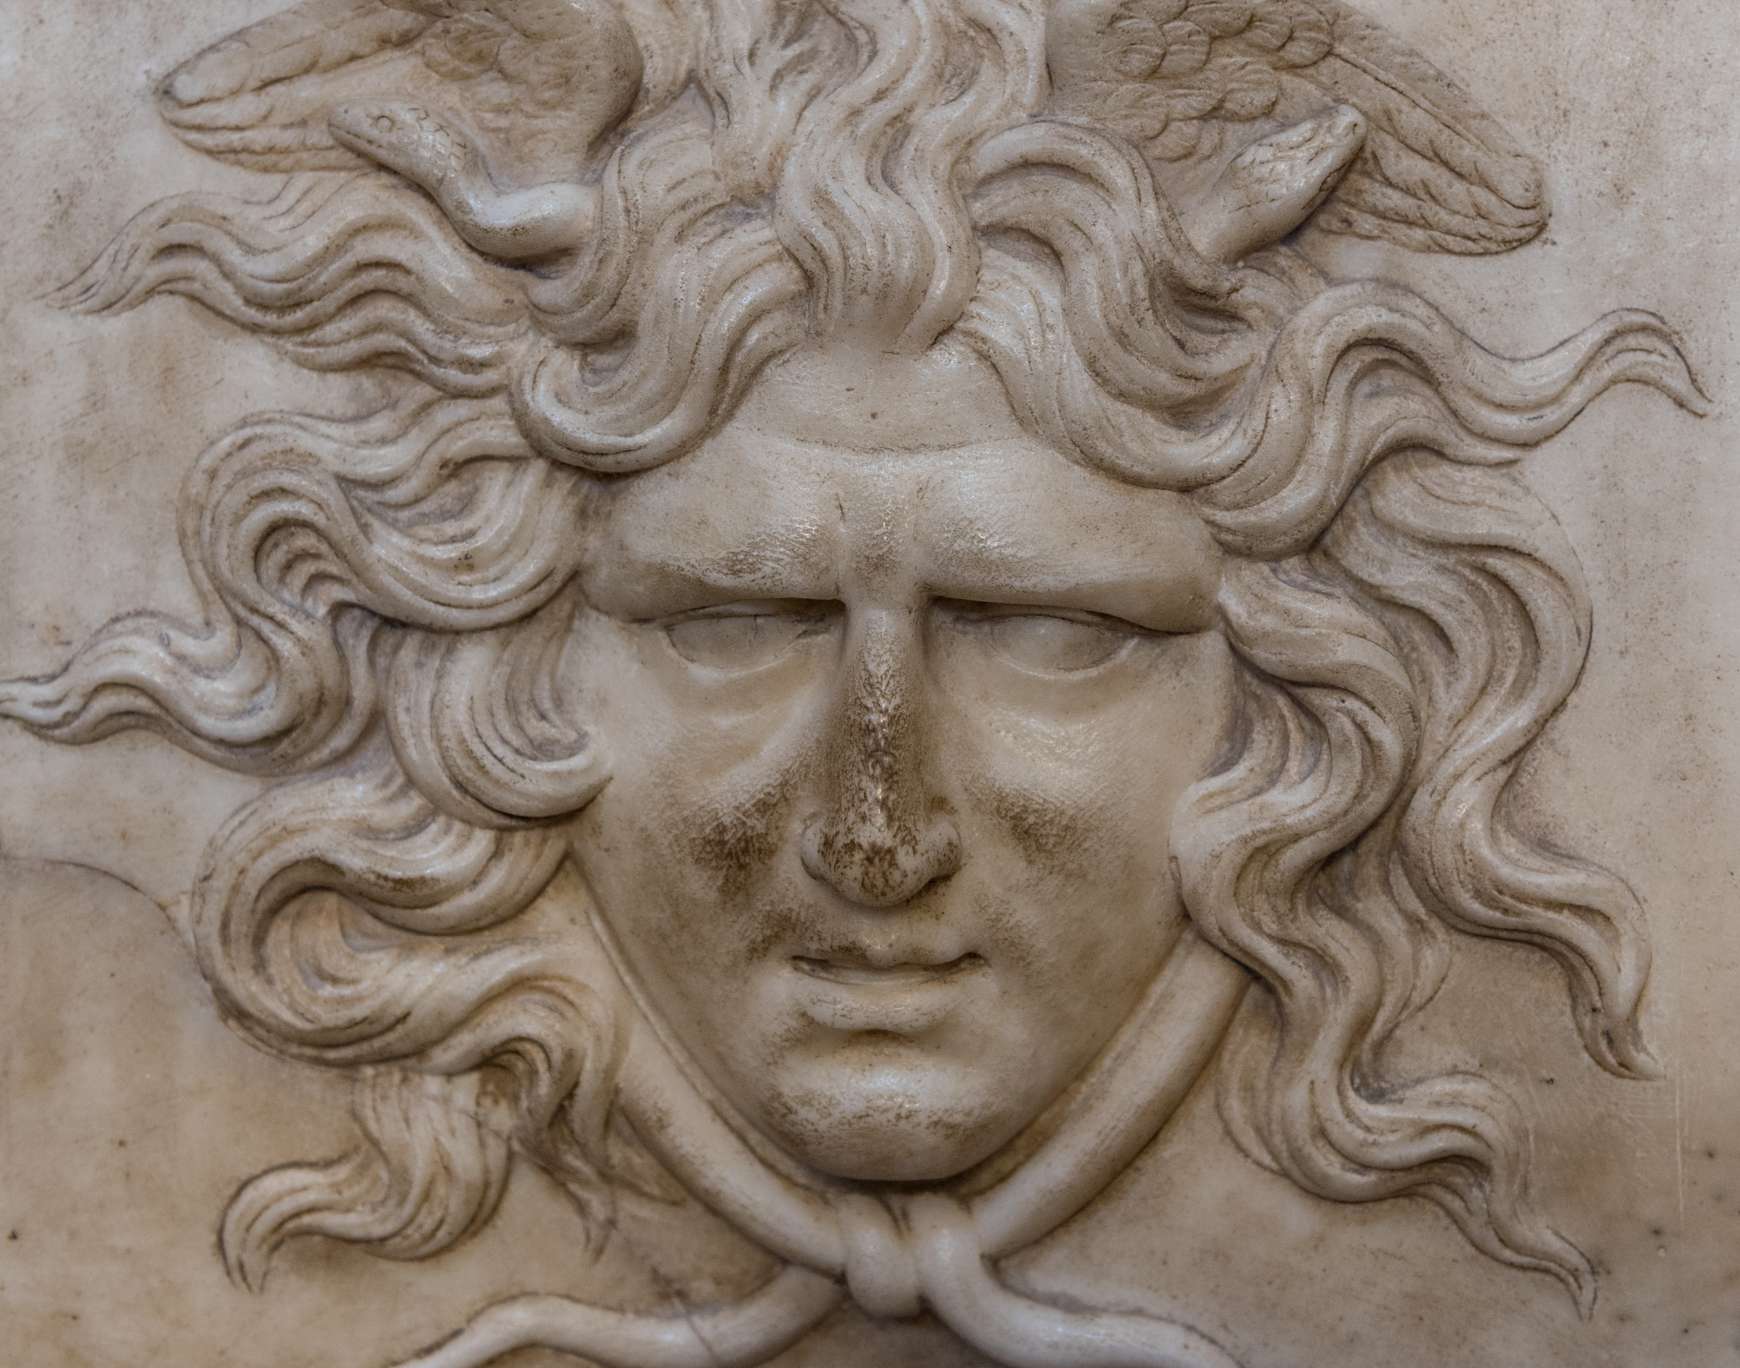 Detail of face on plaster decoration at Roman Villa